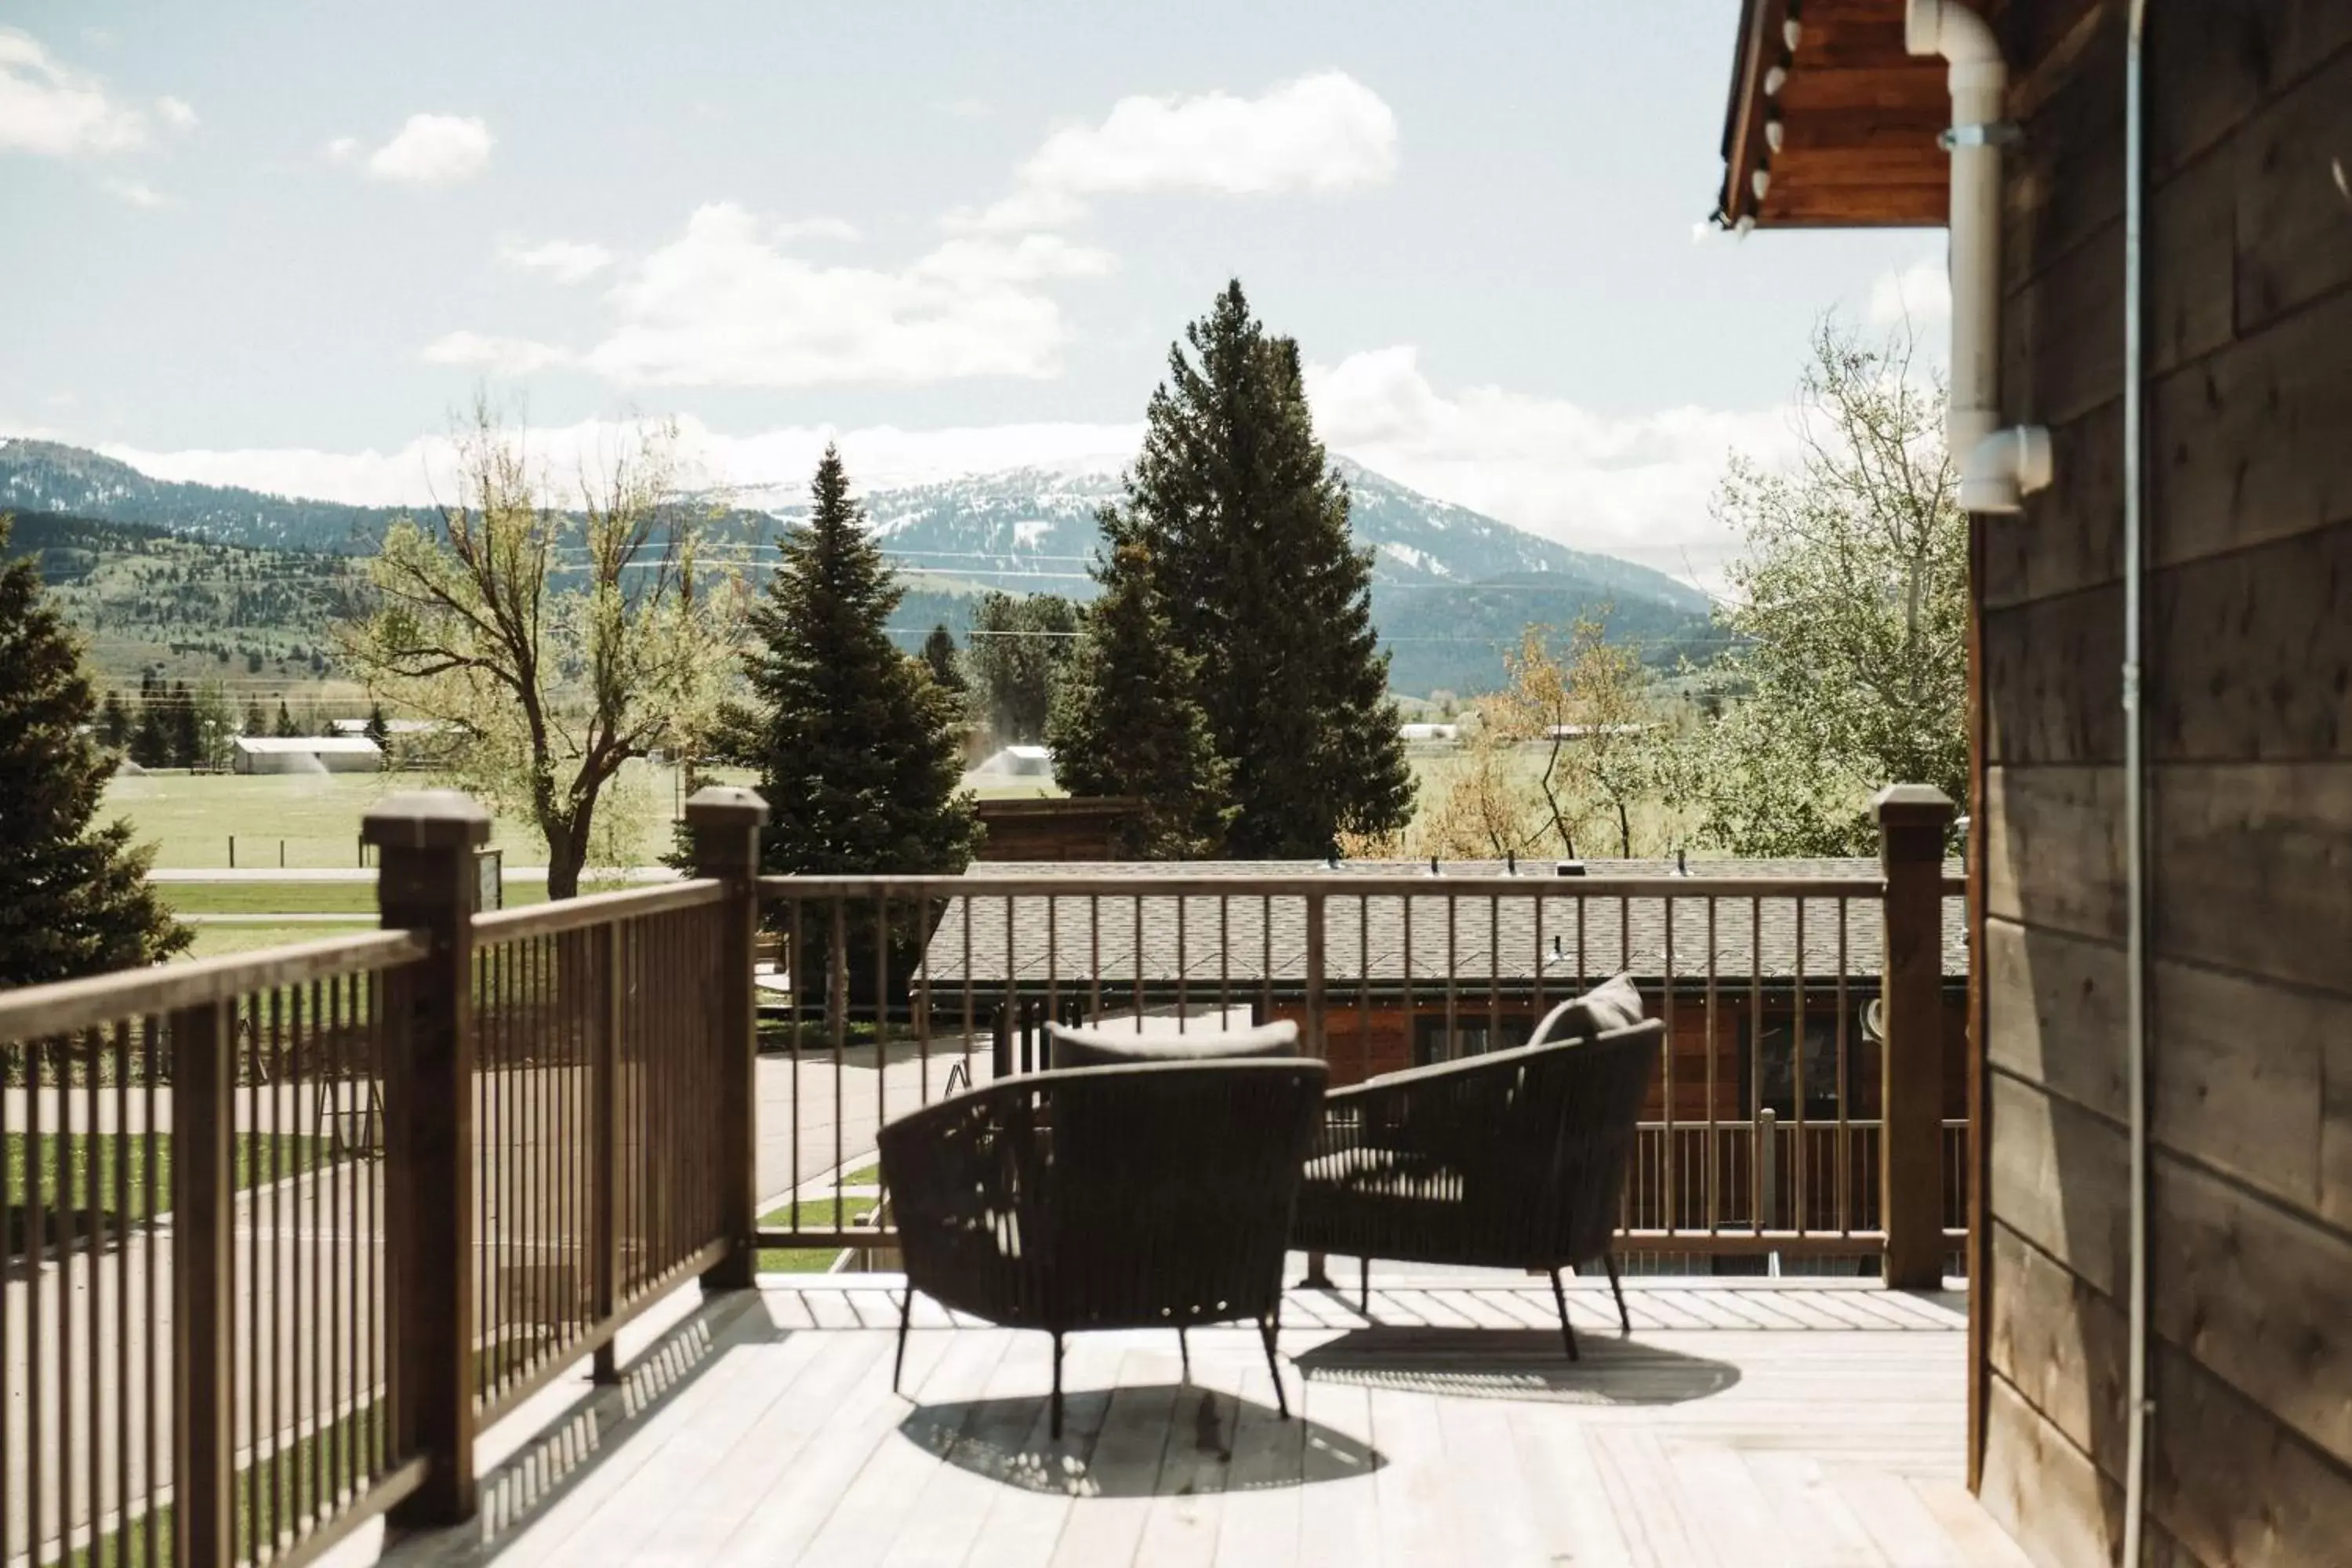 Balcony/Terrace in Teton Valley Resort